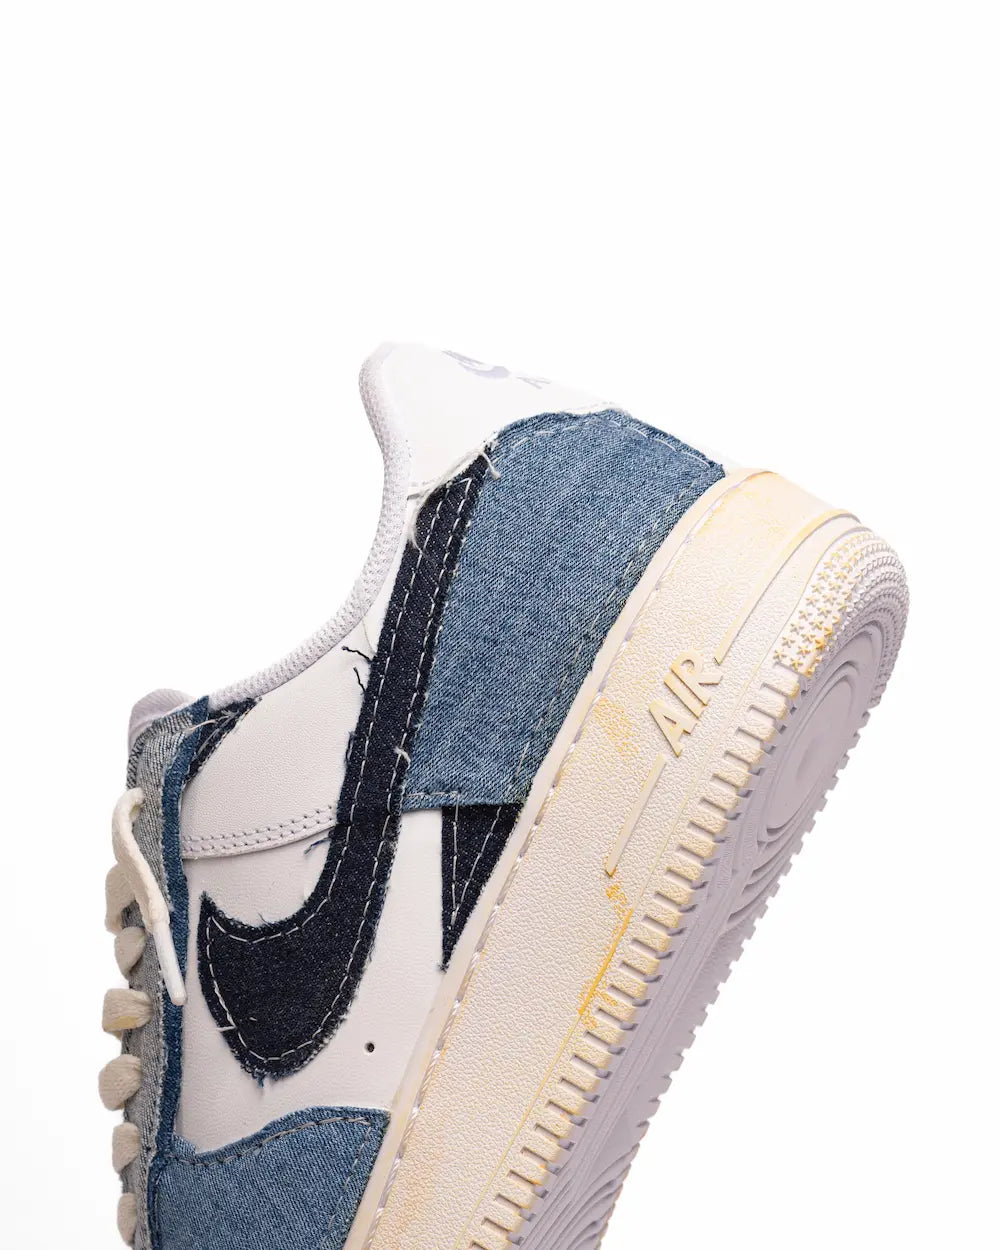 Nike air force 1 custom rivestita in jeans patchwork